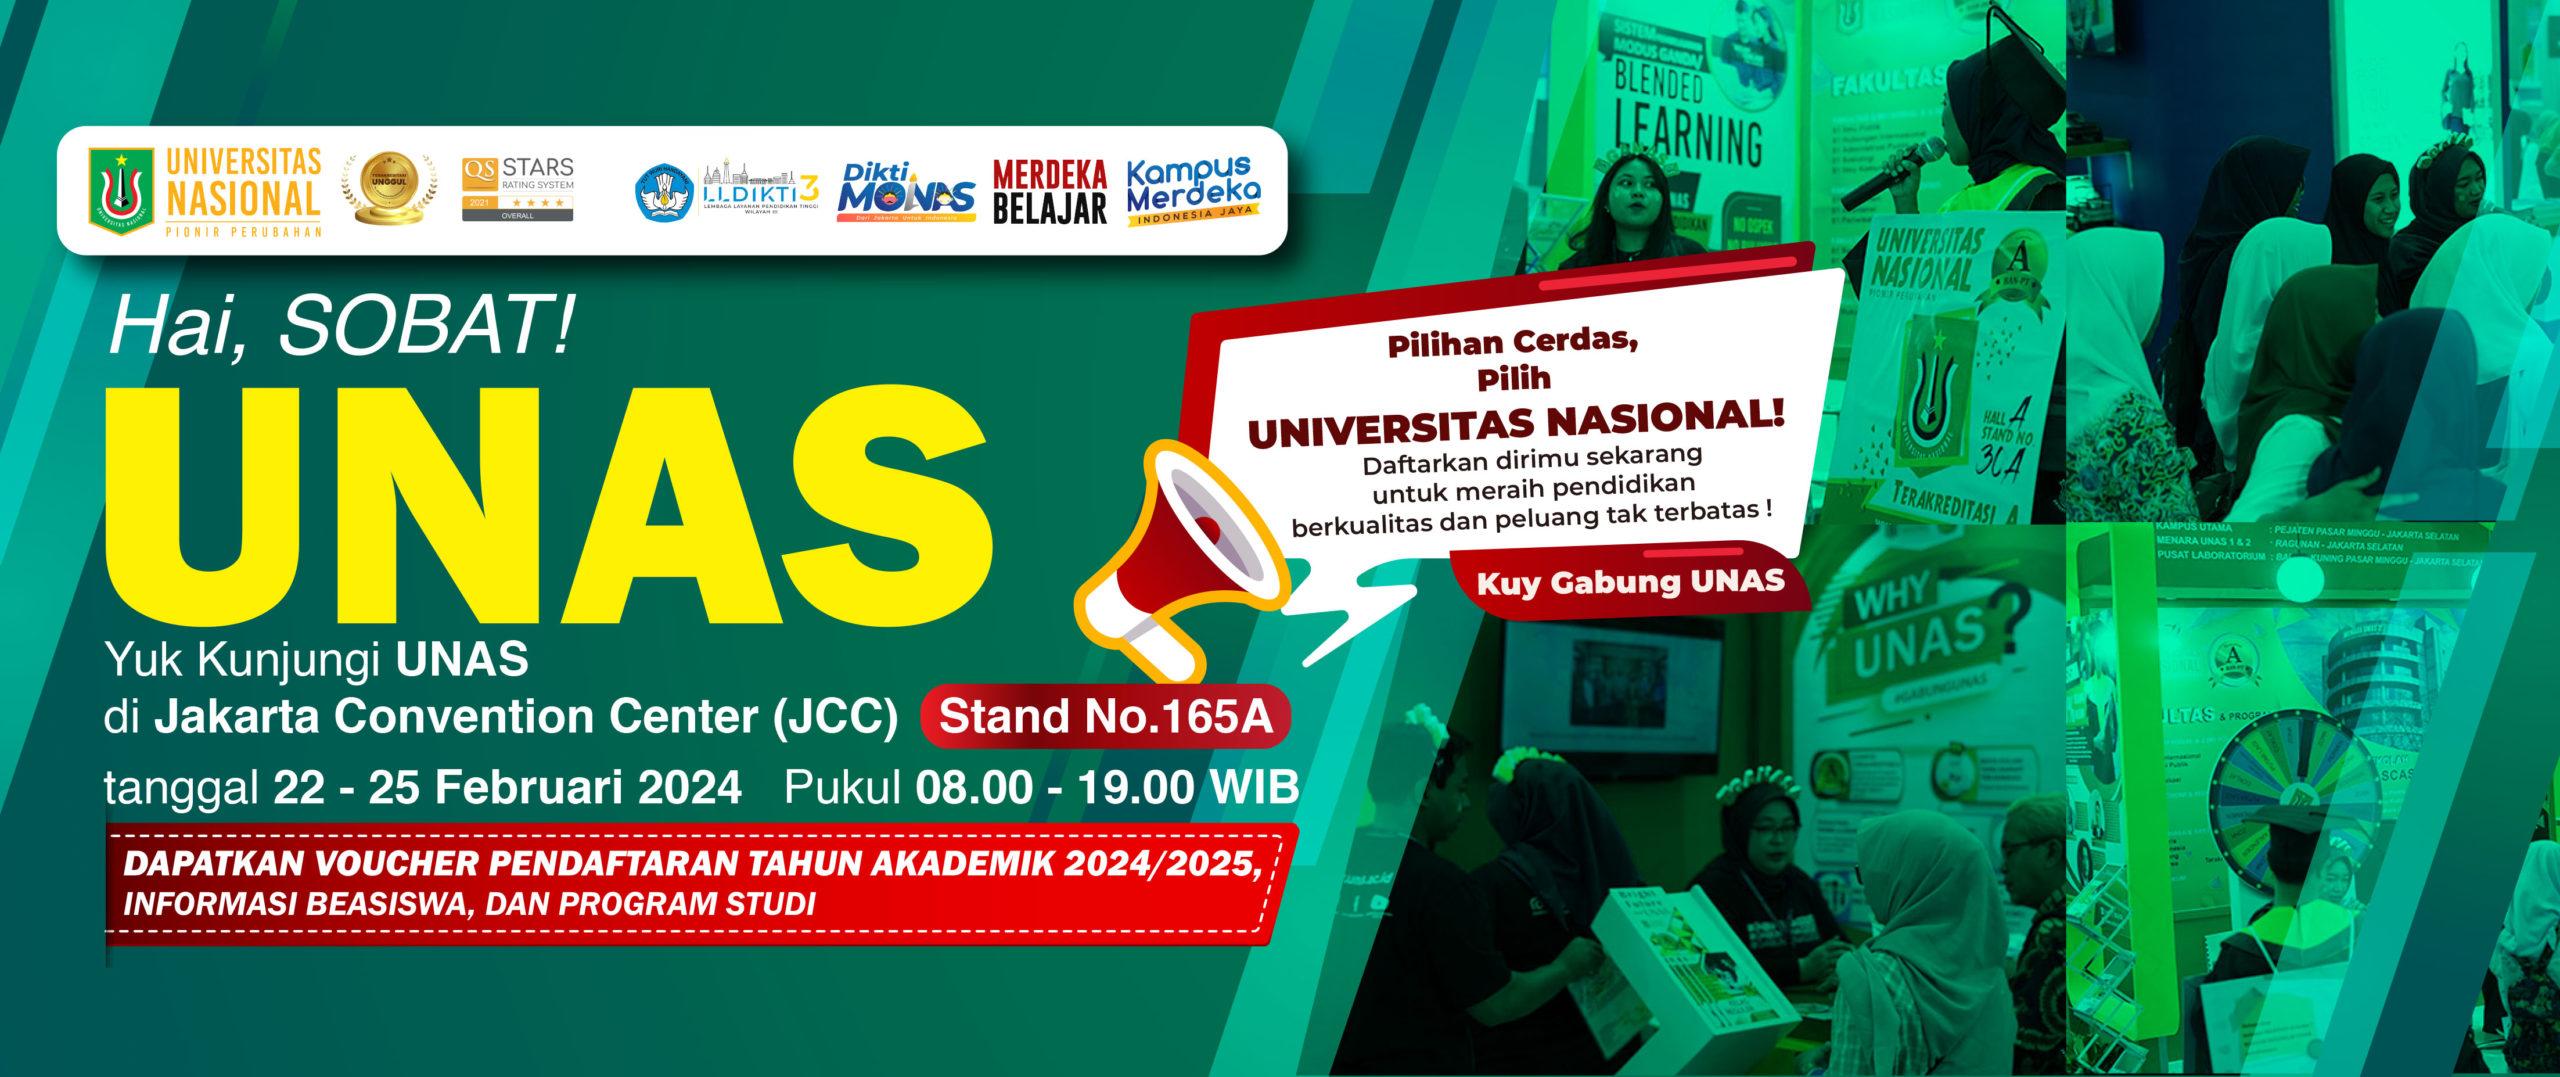 Yuk Kunjungi UNAS di Jakarta Convention Center (JCC)